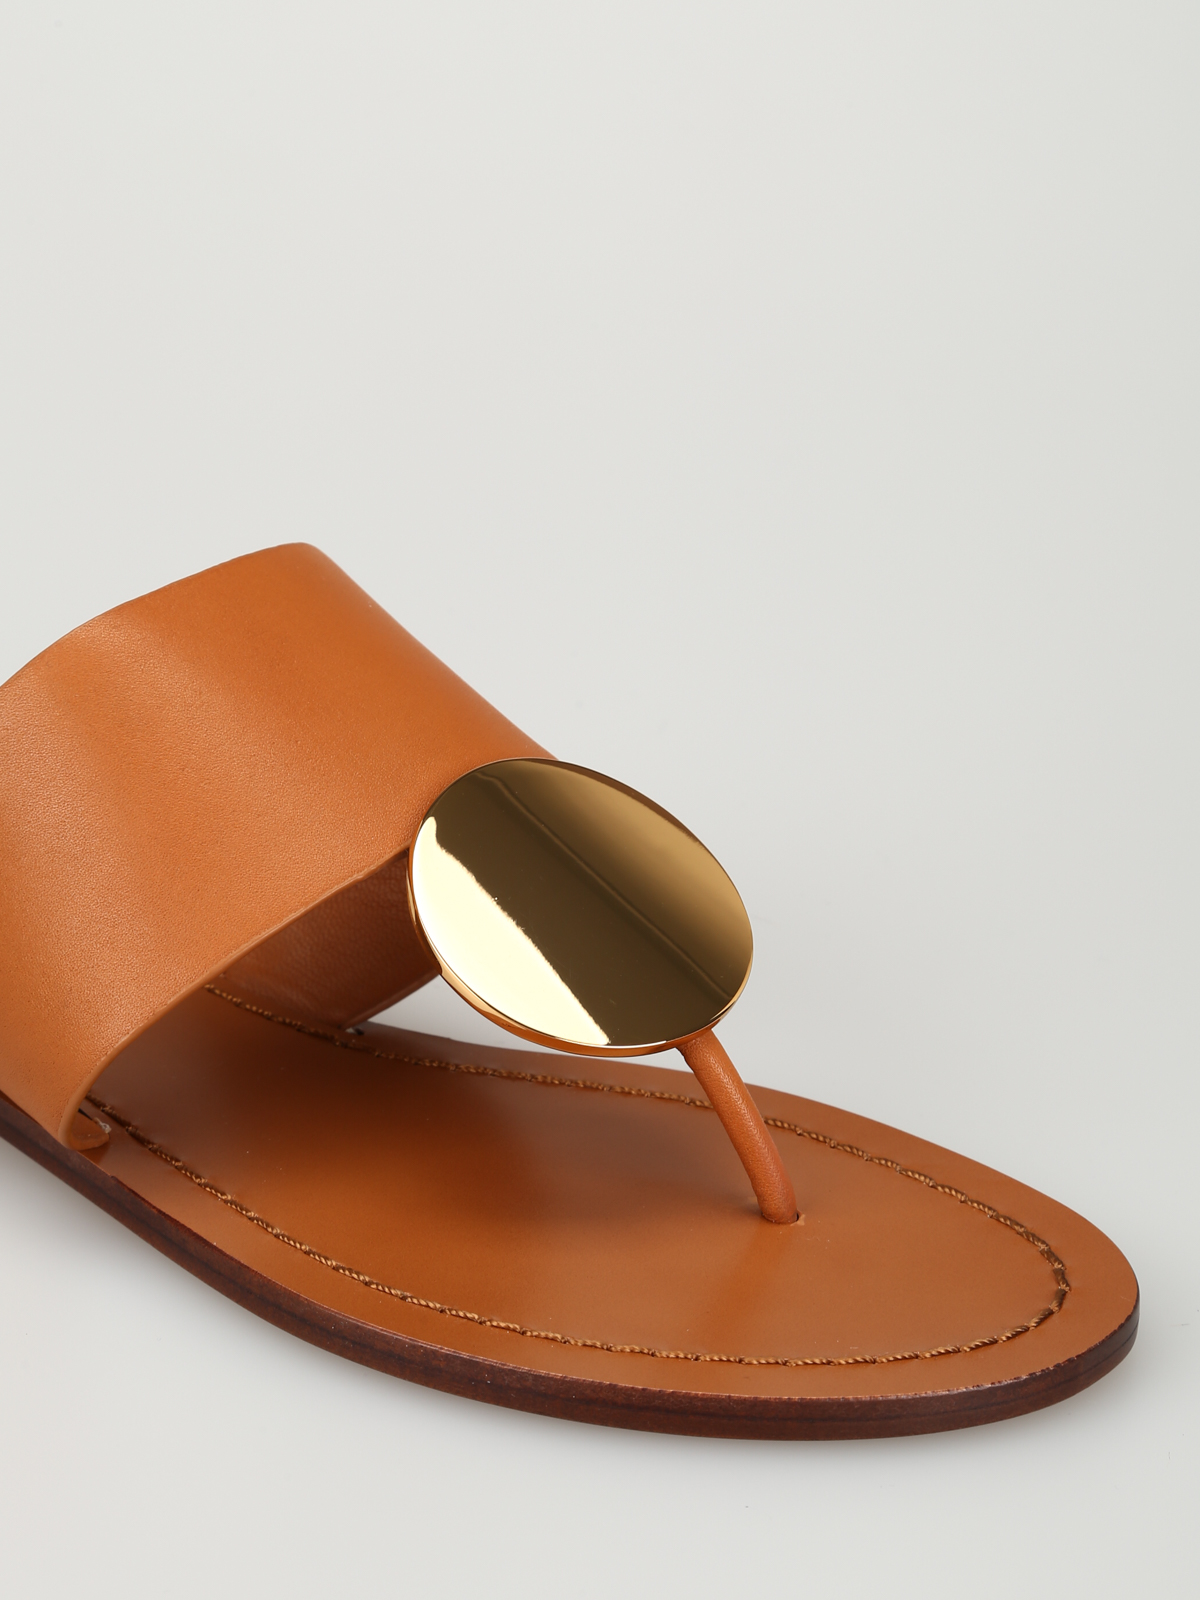 Sandals Tory Burch - Patos Disk thong sandals - 46914207 